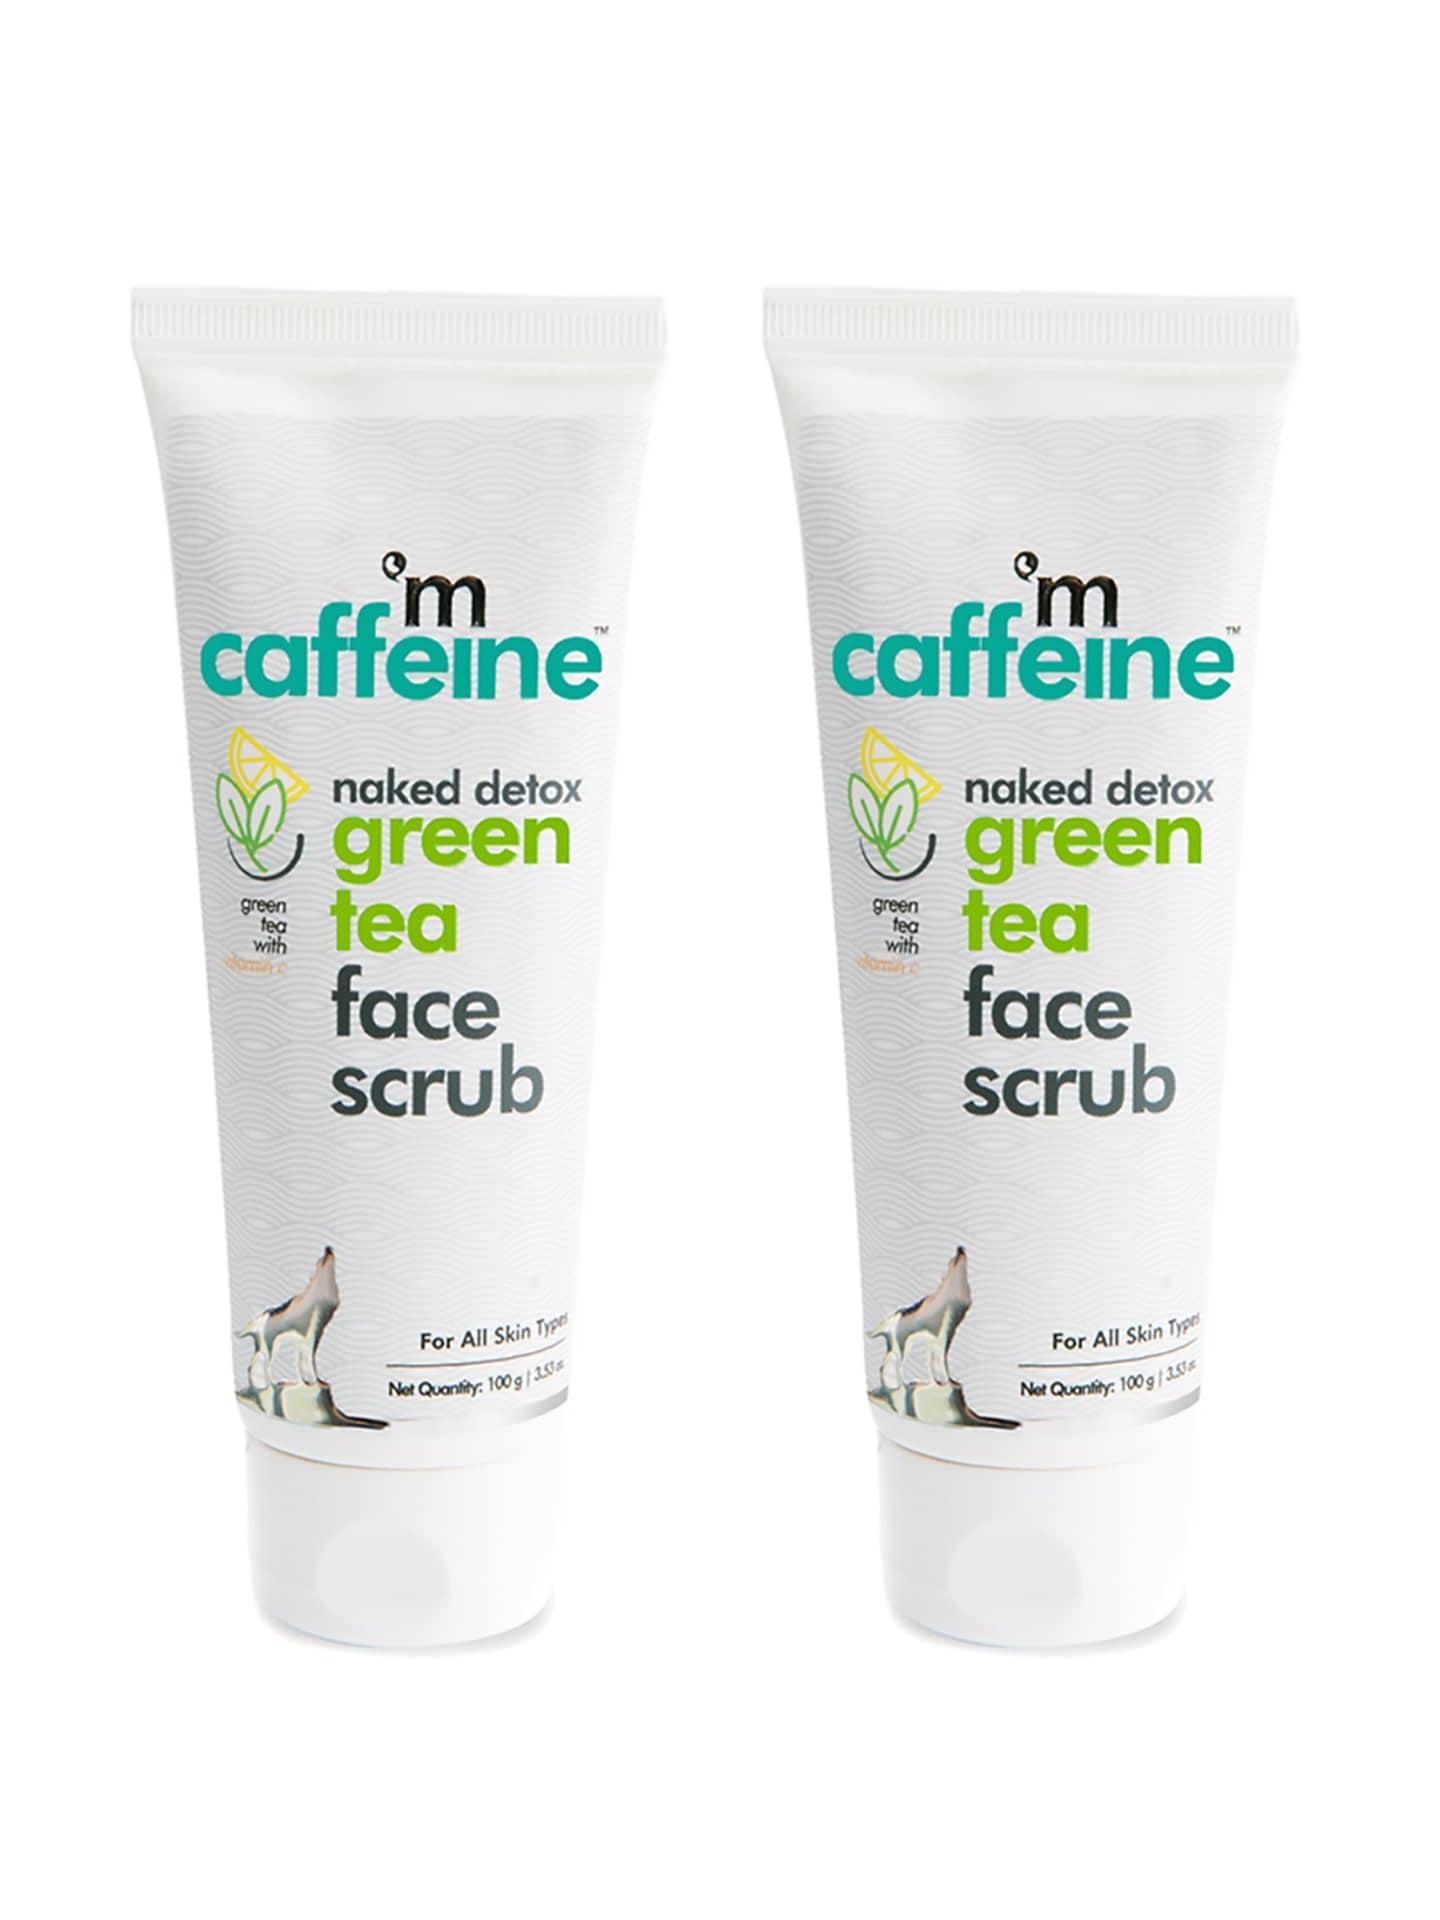 mcaffeine-set-of-2-green-tea-face-scrub-with-vitamin-c---100g-each